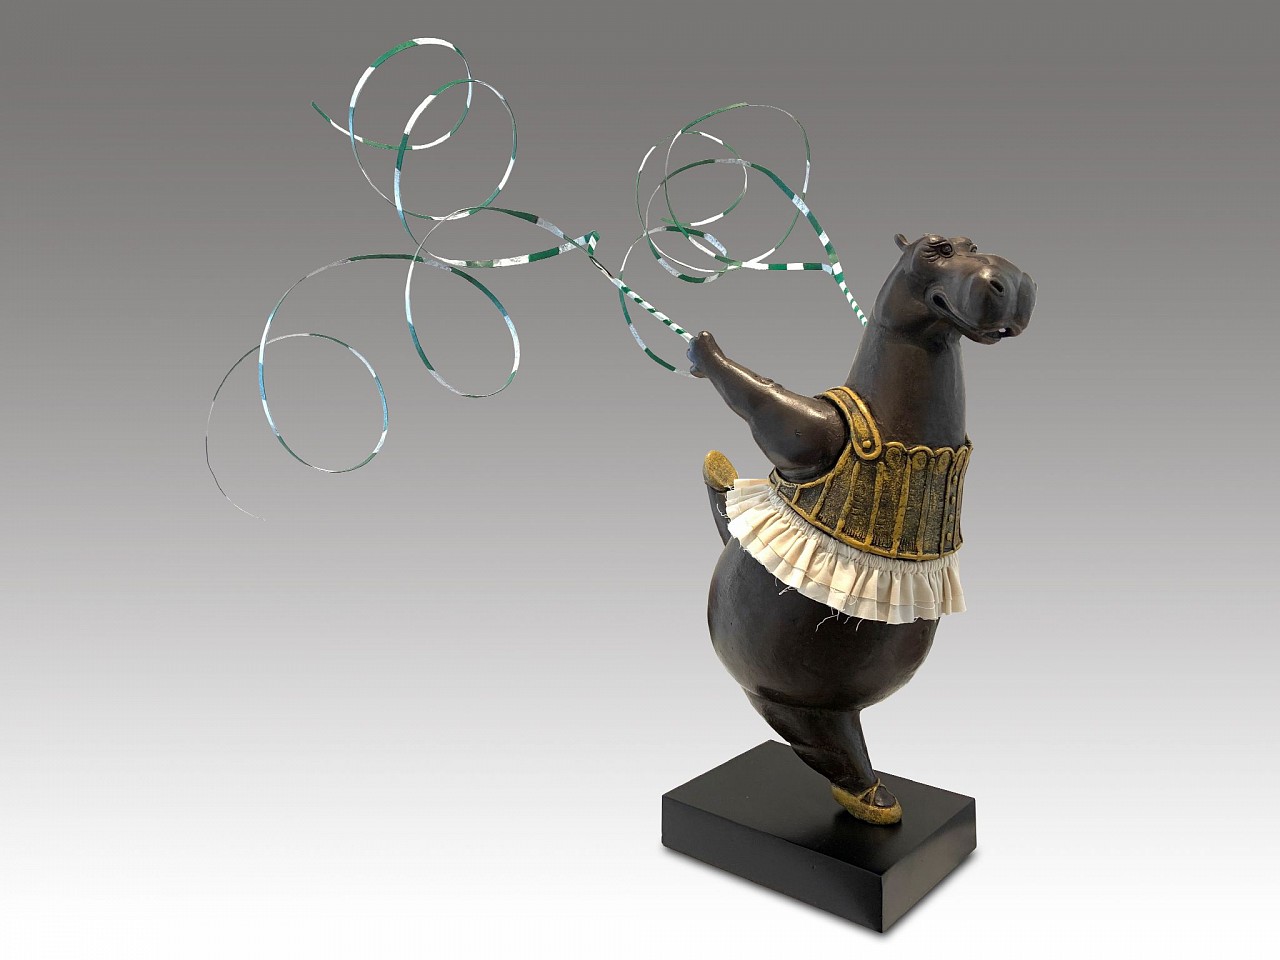 Bjorn Skaarup, Hippo Circus Ribbon Dancer, 2021
bronze, steel, fabric skirt, 16 x 18 x 15 in. (40.6 x 45.7 x 38.1 cm)
BS221110